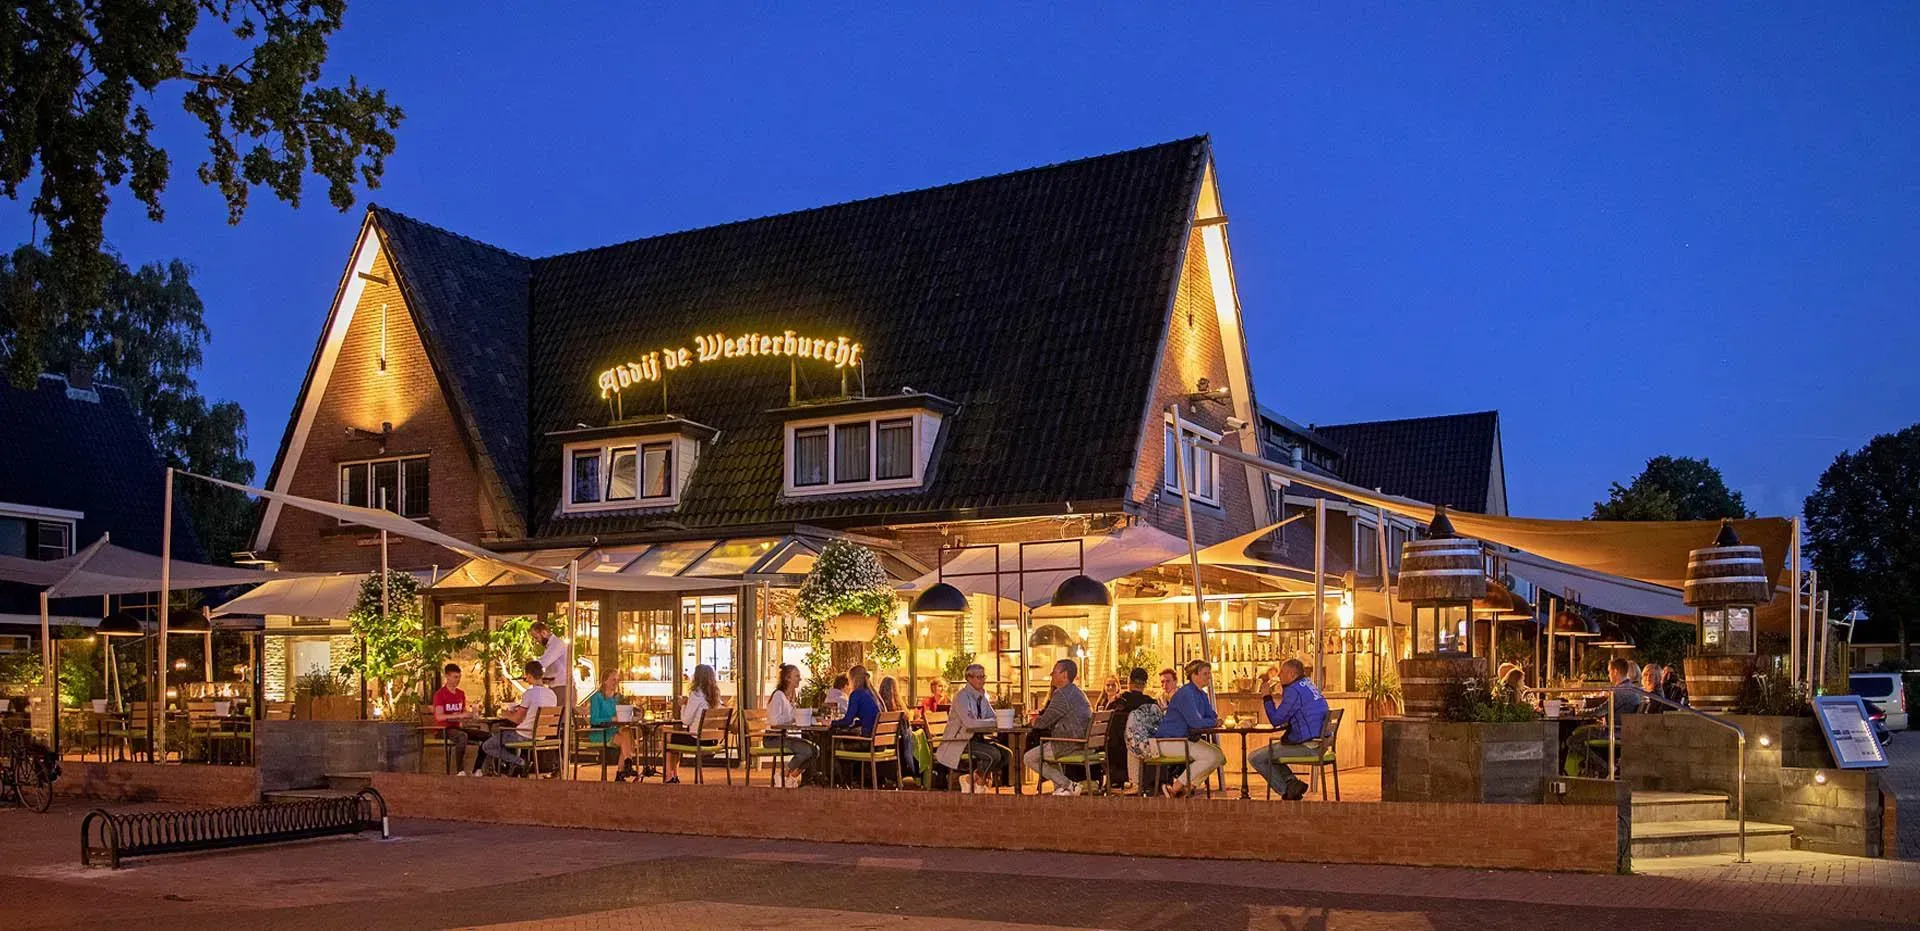 Hotel & Restaurant in Westerbork (Midden-Drenthe)